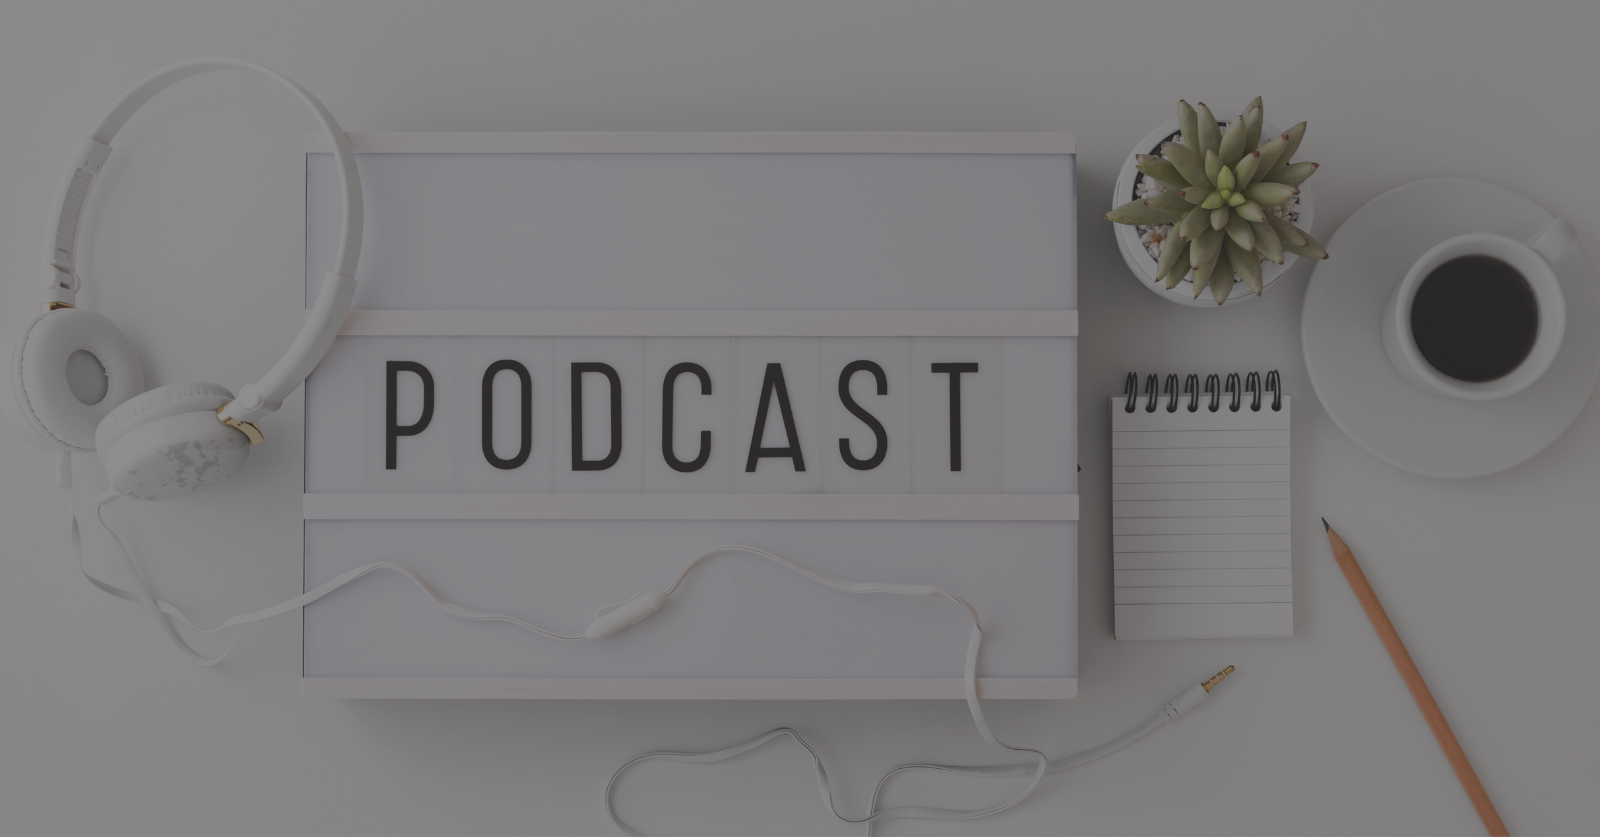 Podcast, marketing, communications